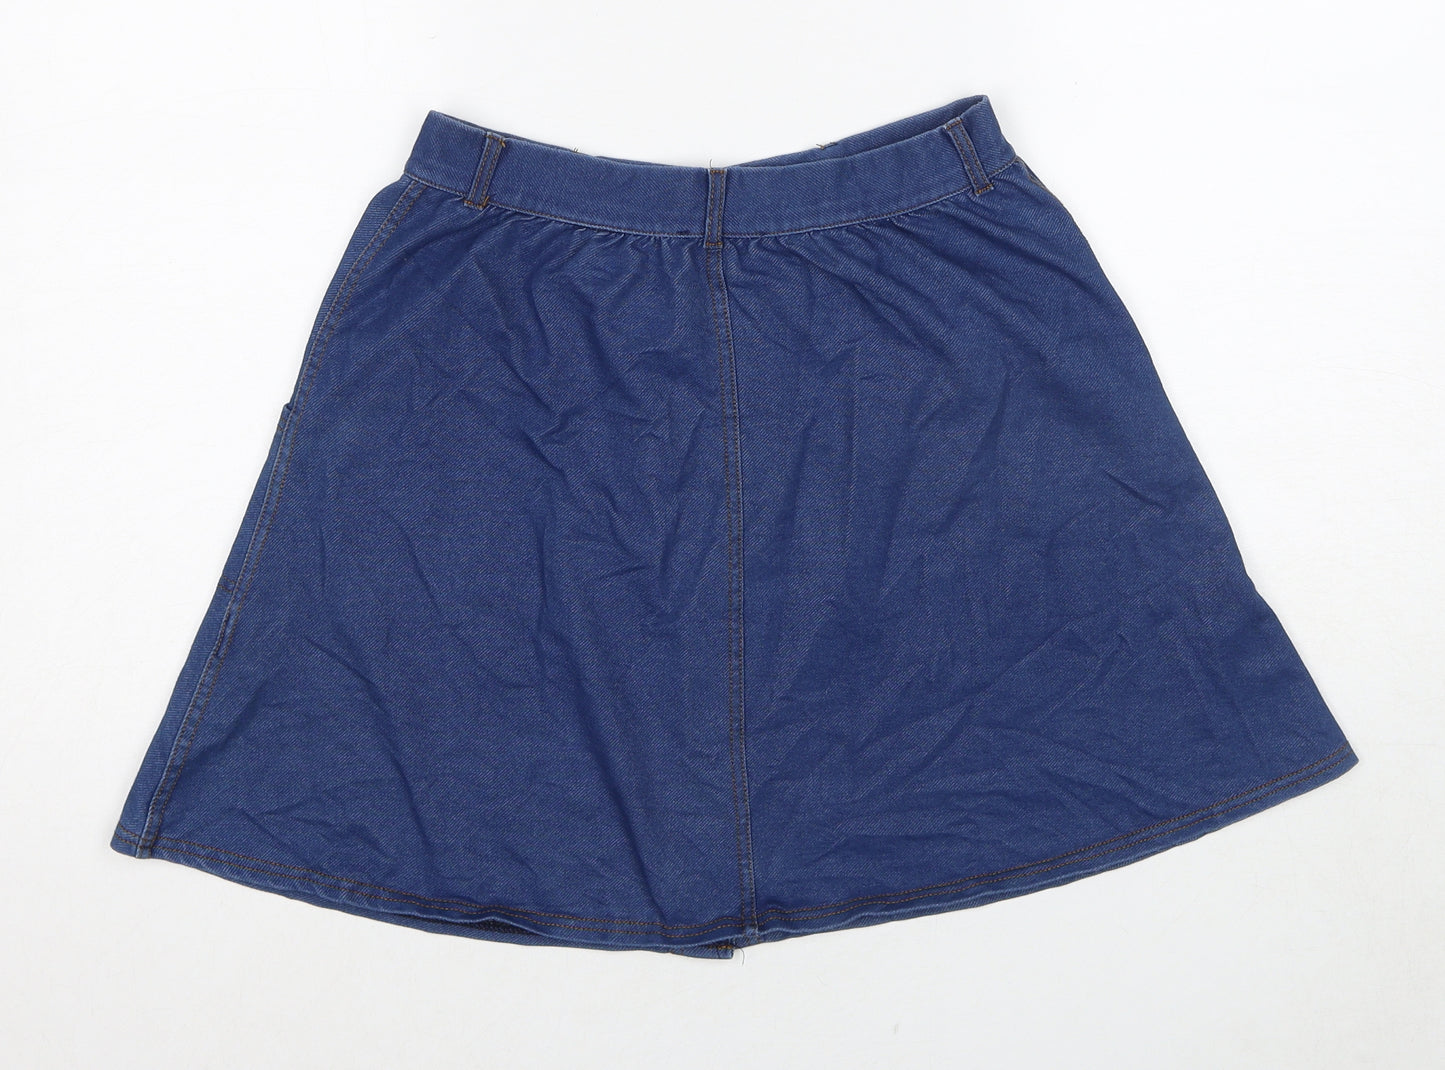 Topshop Womens Blue Cotton Swing Skirt Size 8 Button